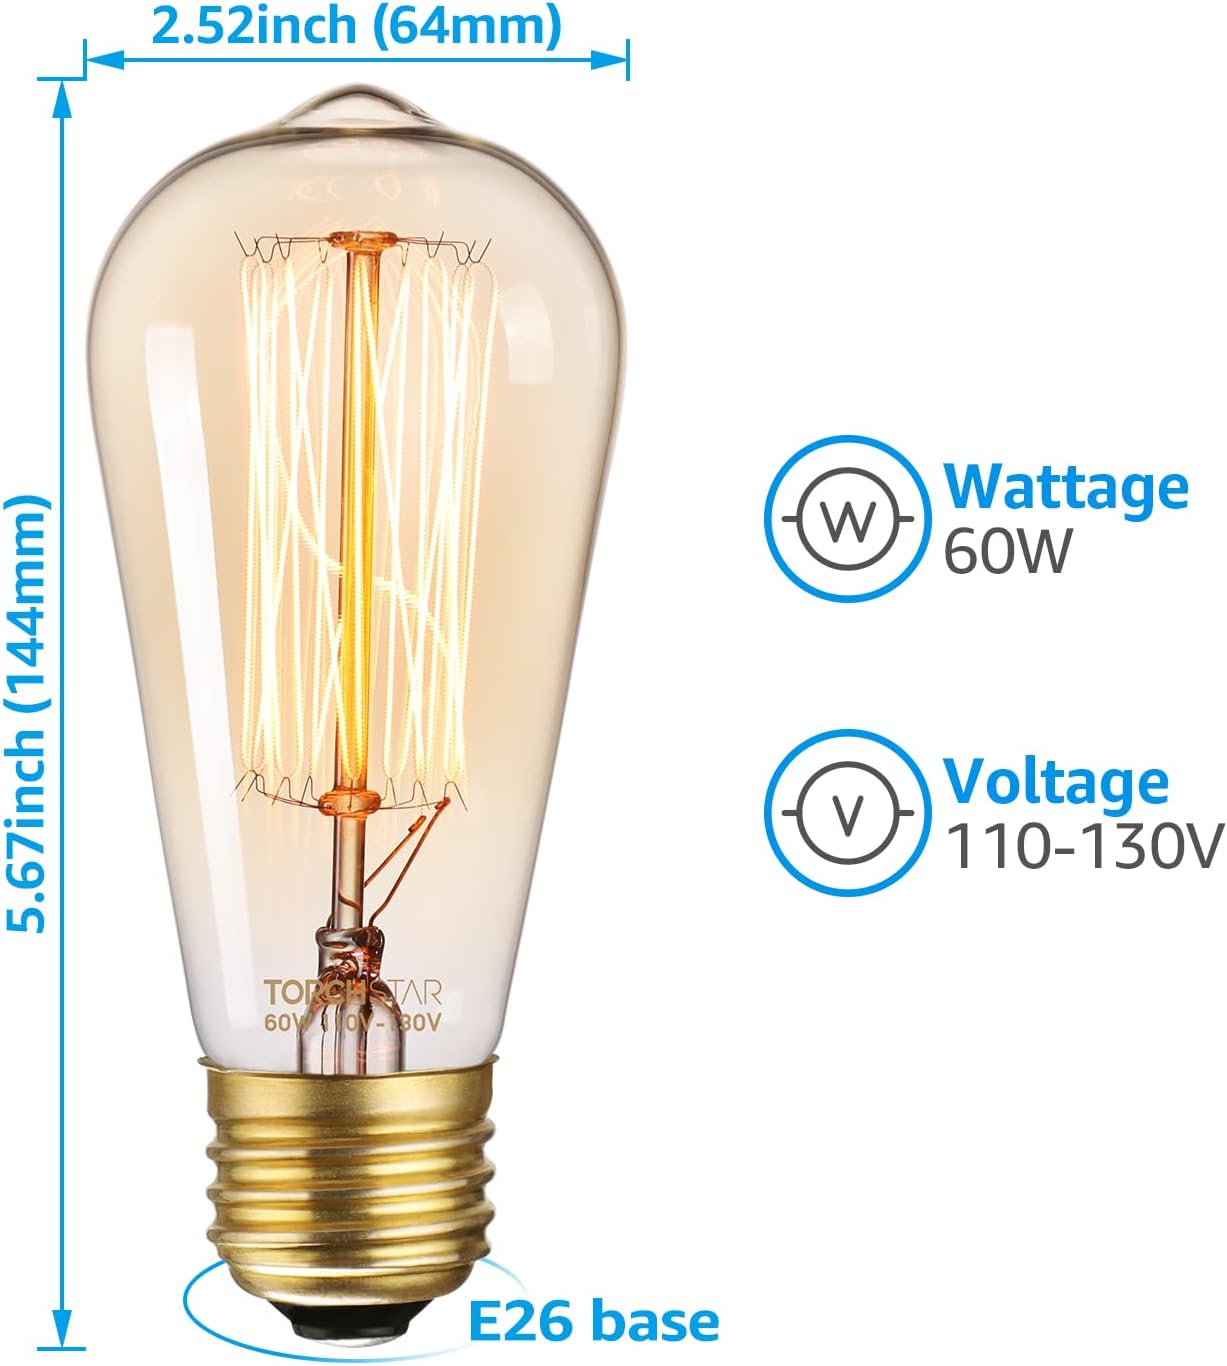 GoldenEra Classic 60W ST64 Filament Vintage Bulbs - E26 Base - 2200K Amber Warm